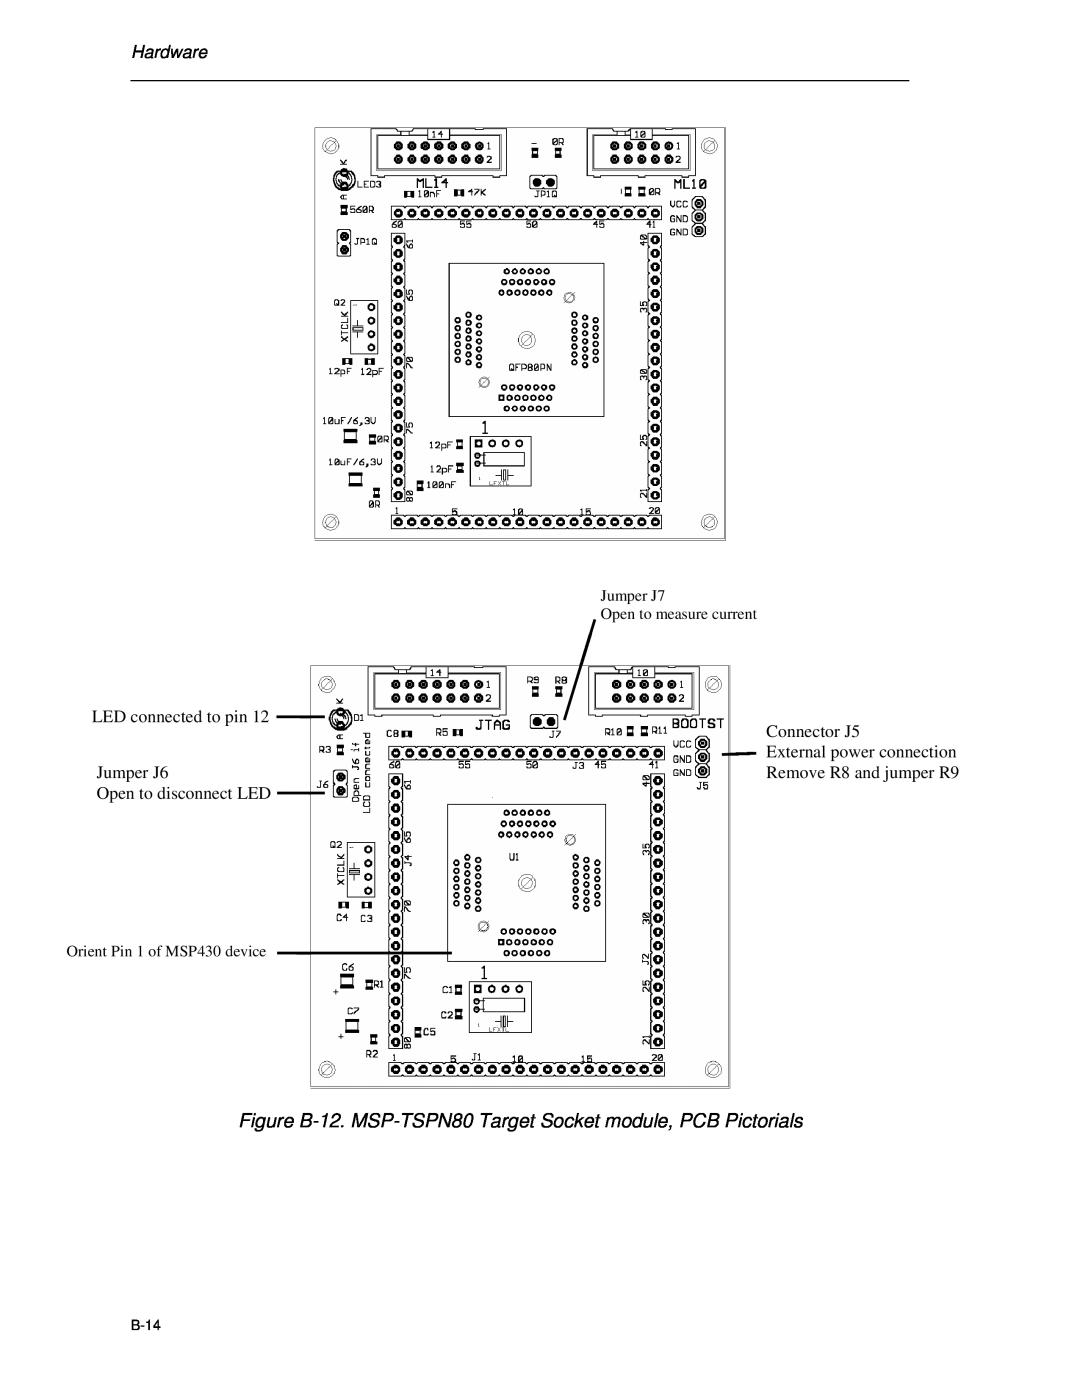 Texas Instruments MSP-FET430 manual Figure B-12. MSP-TSPN80 Target Socket module, PCB Pictorials, Hardware, B-14 